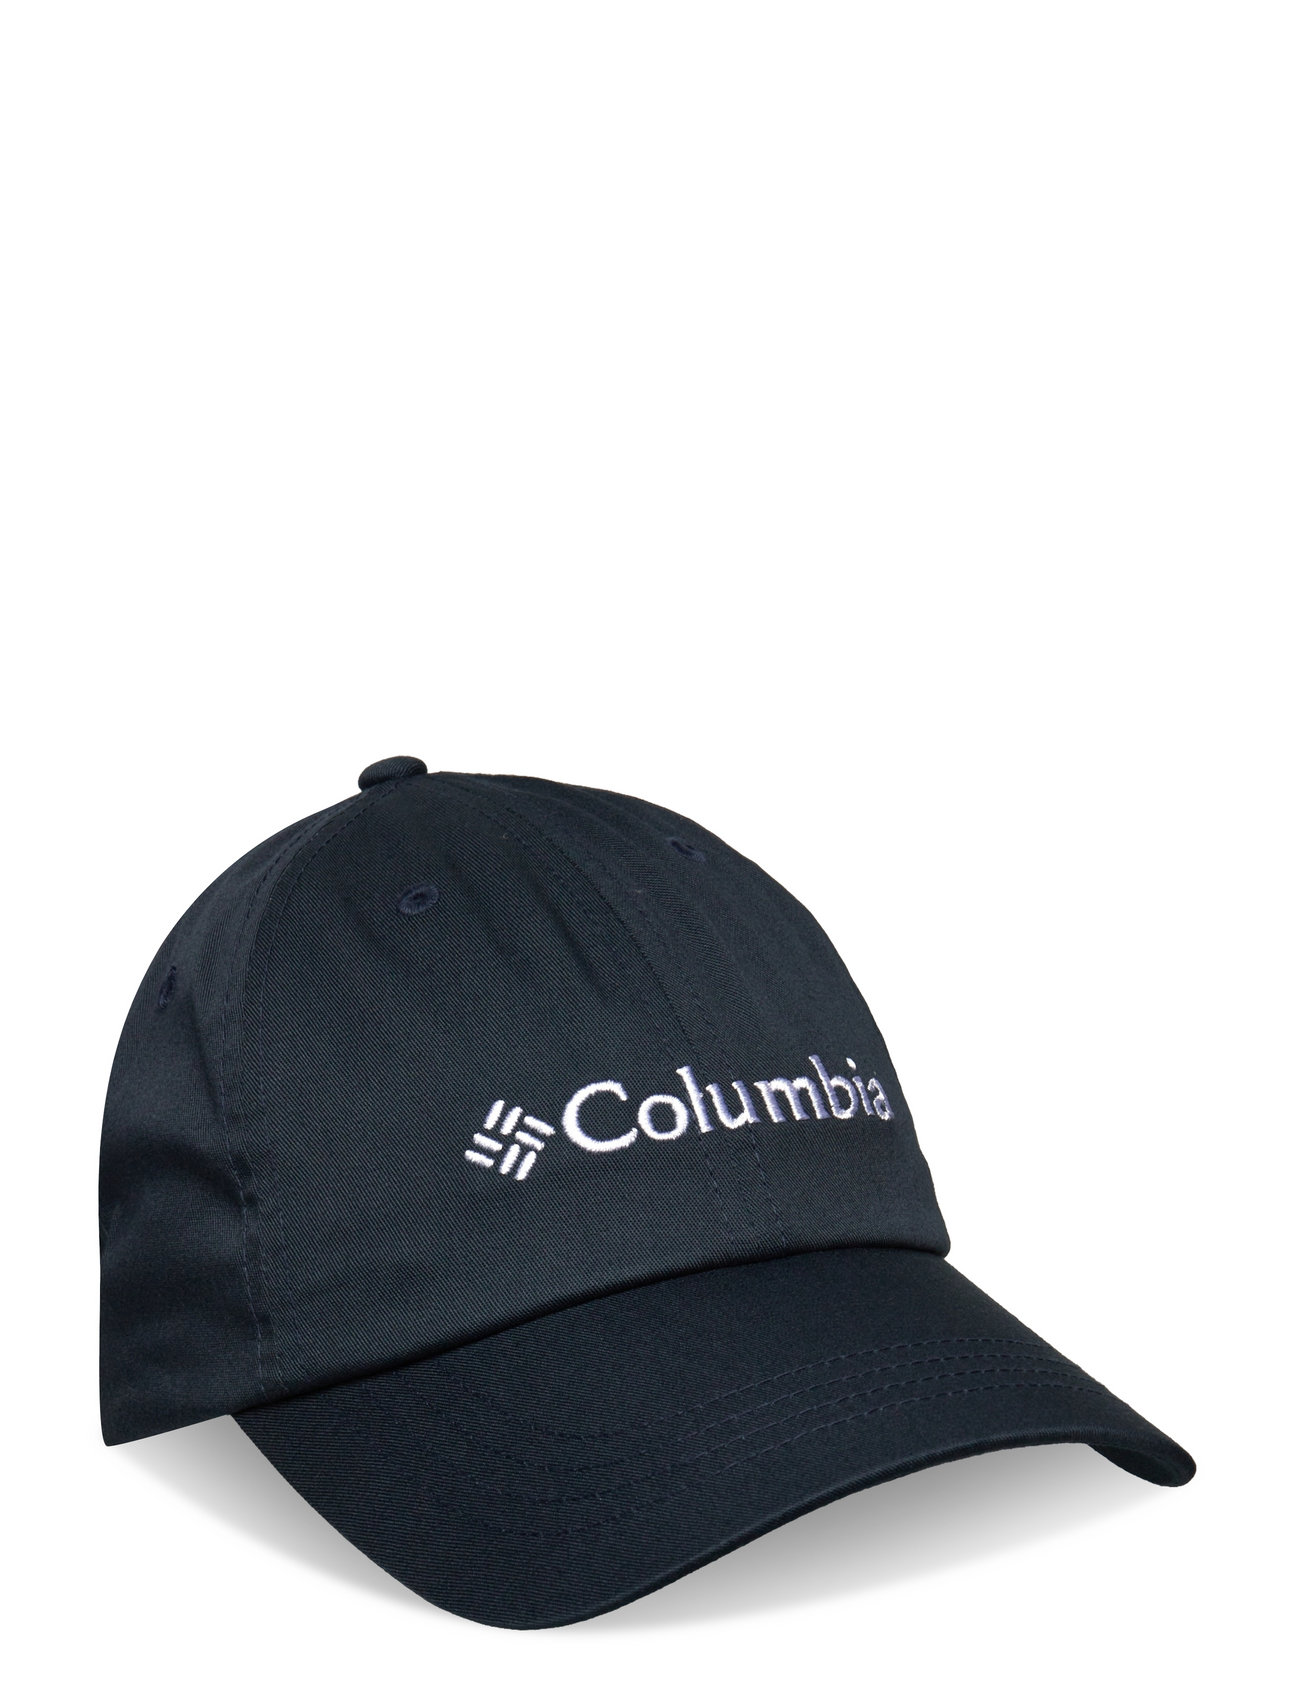 Columbia Sportswear Roc Ii Ball Cap - Caps